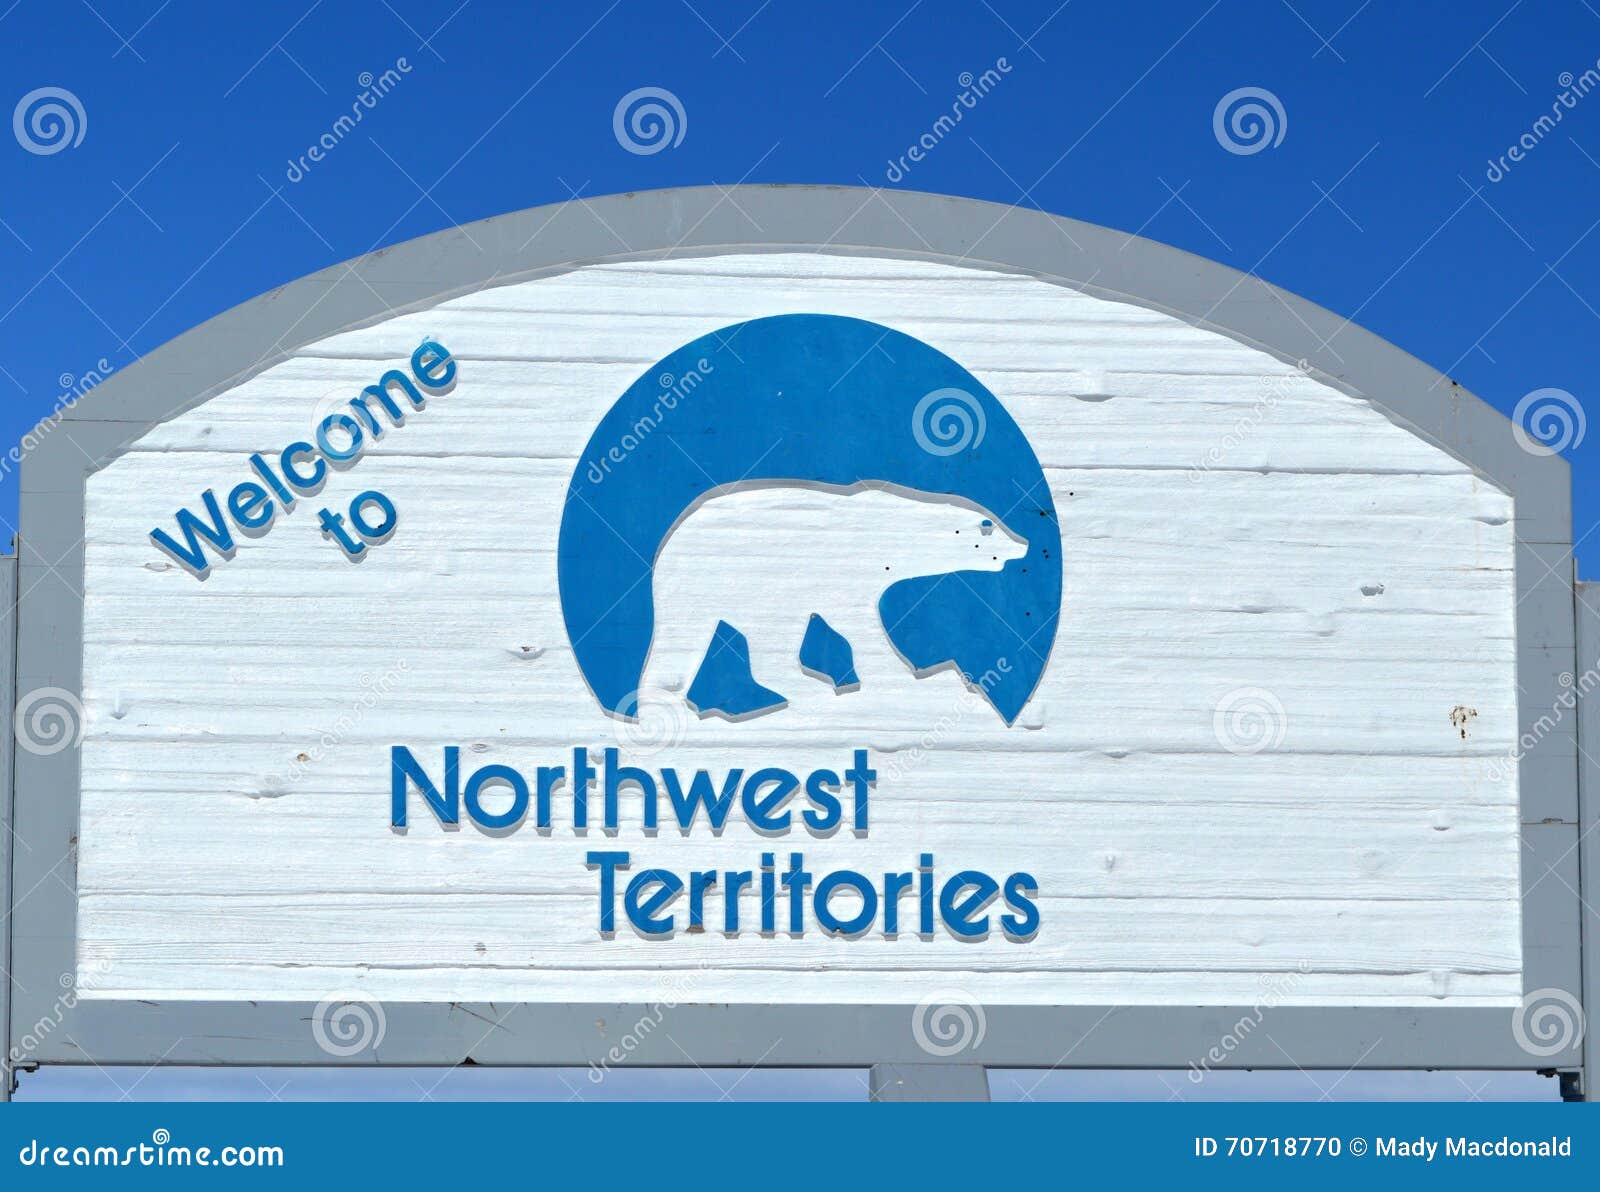 northwest territories border sign